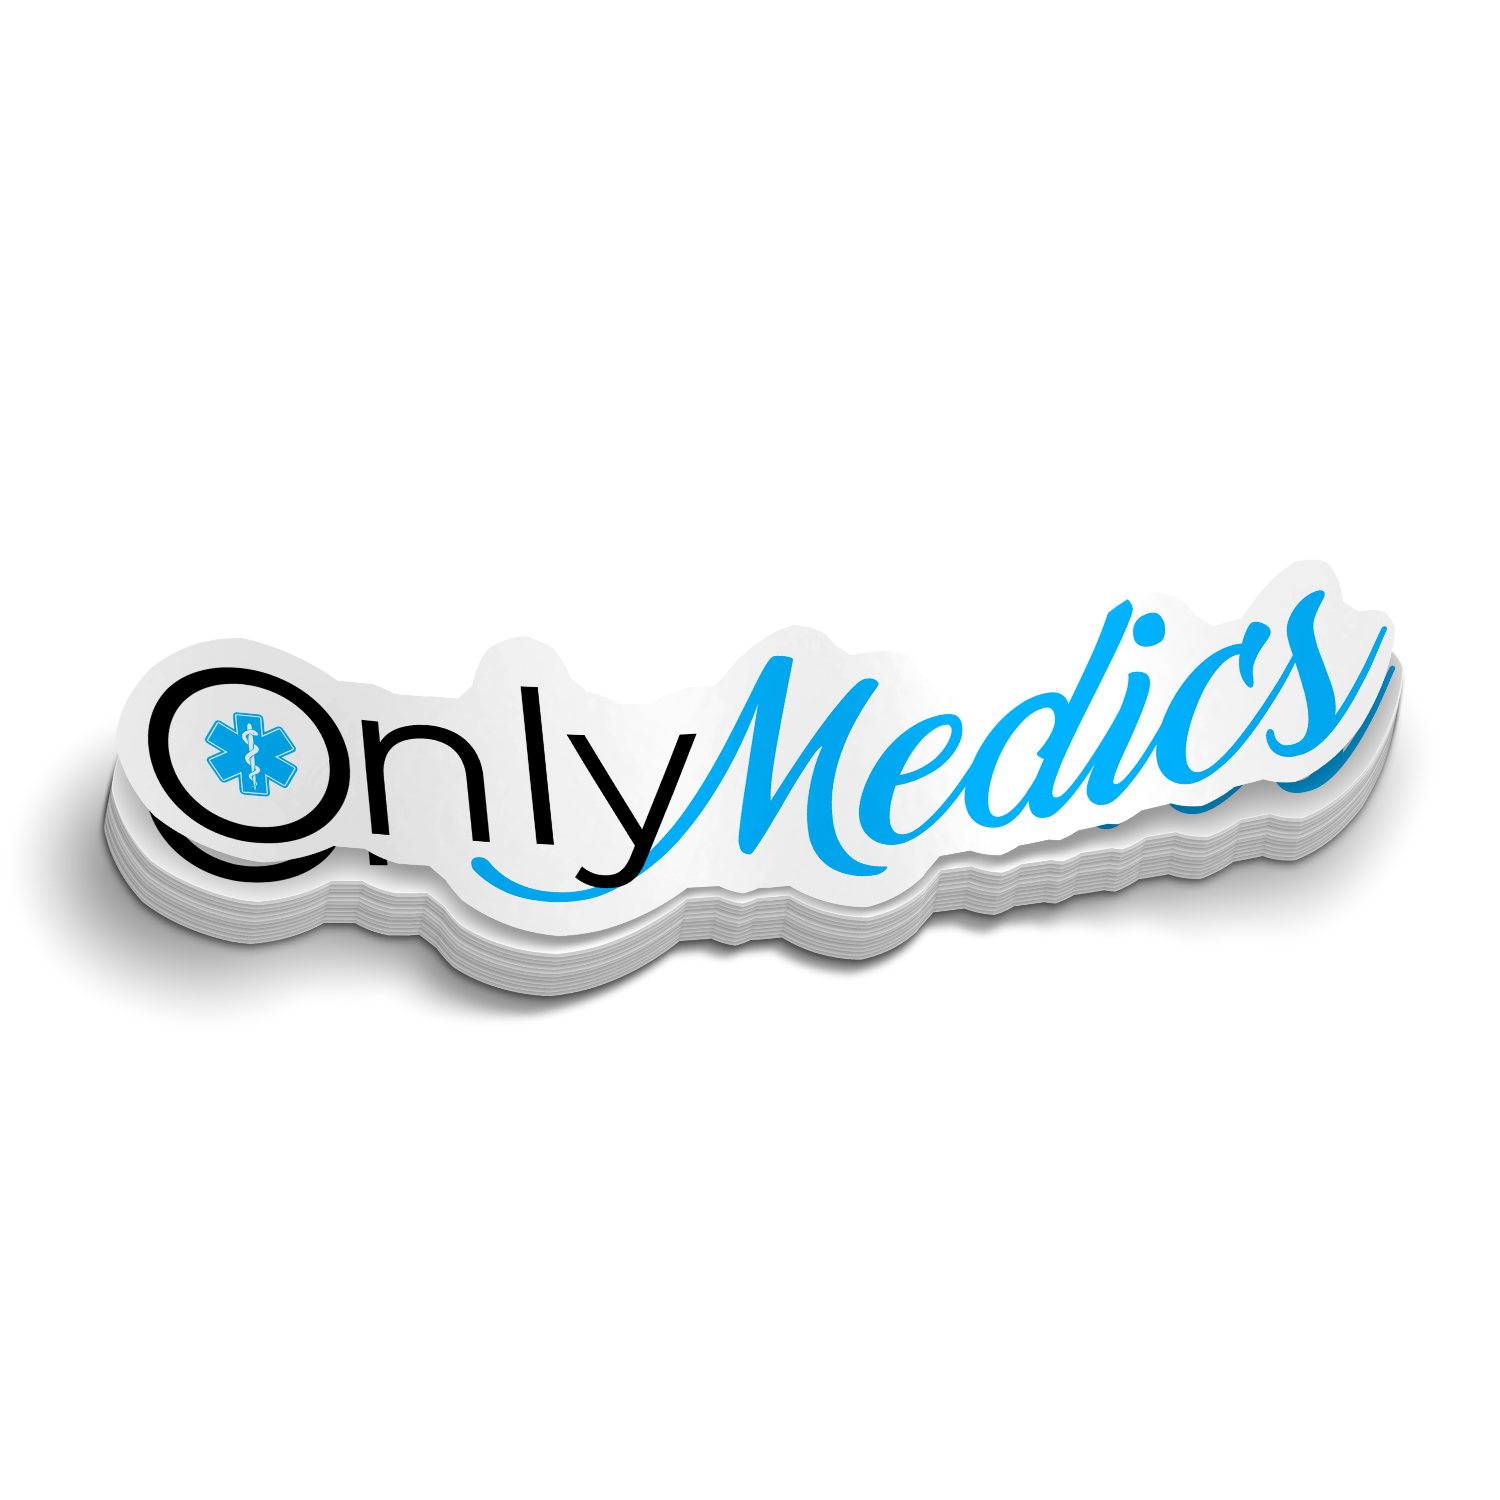 Only Medics Sticker